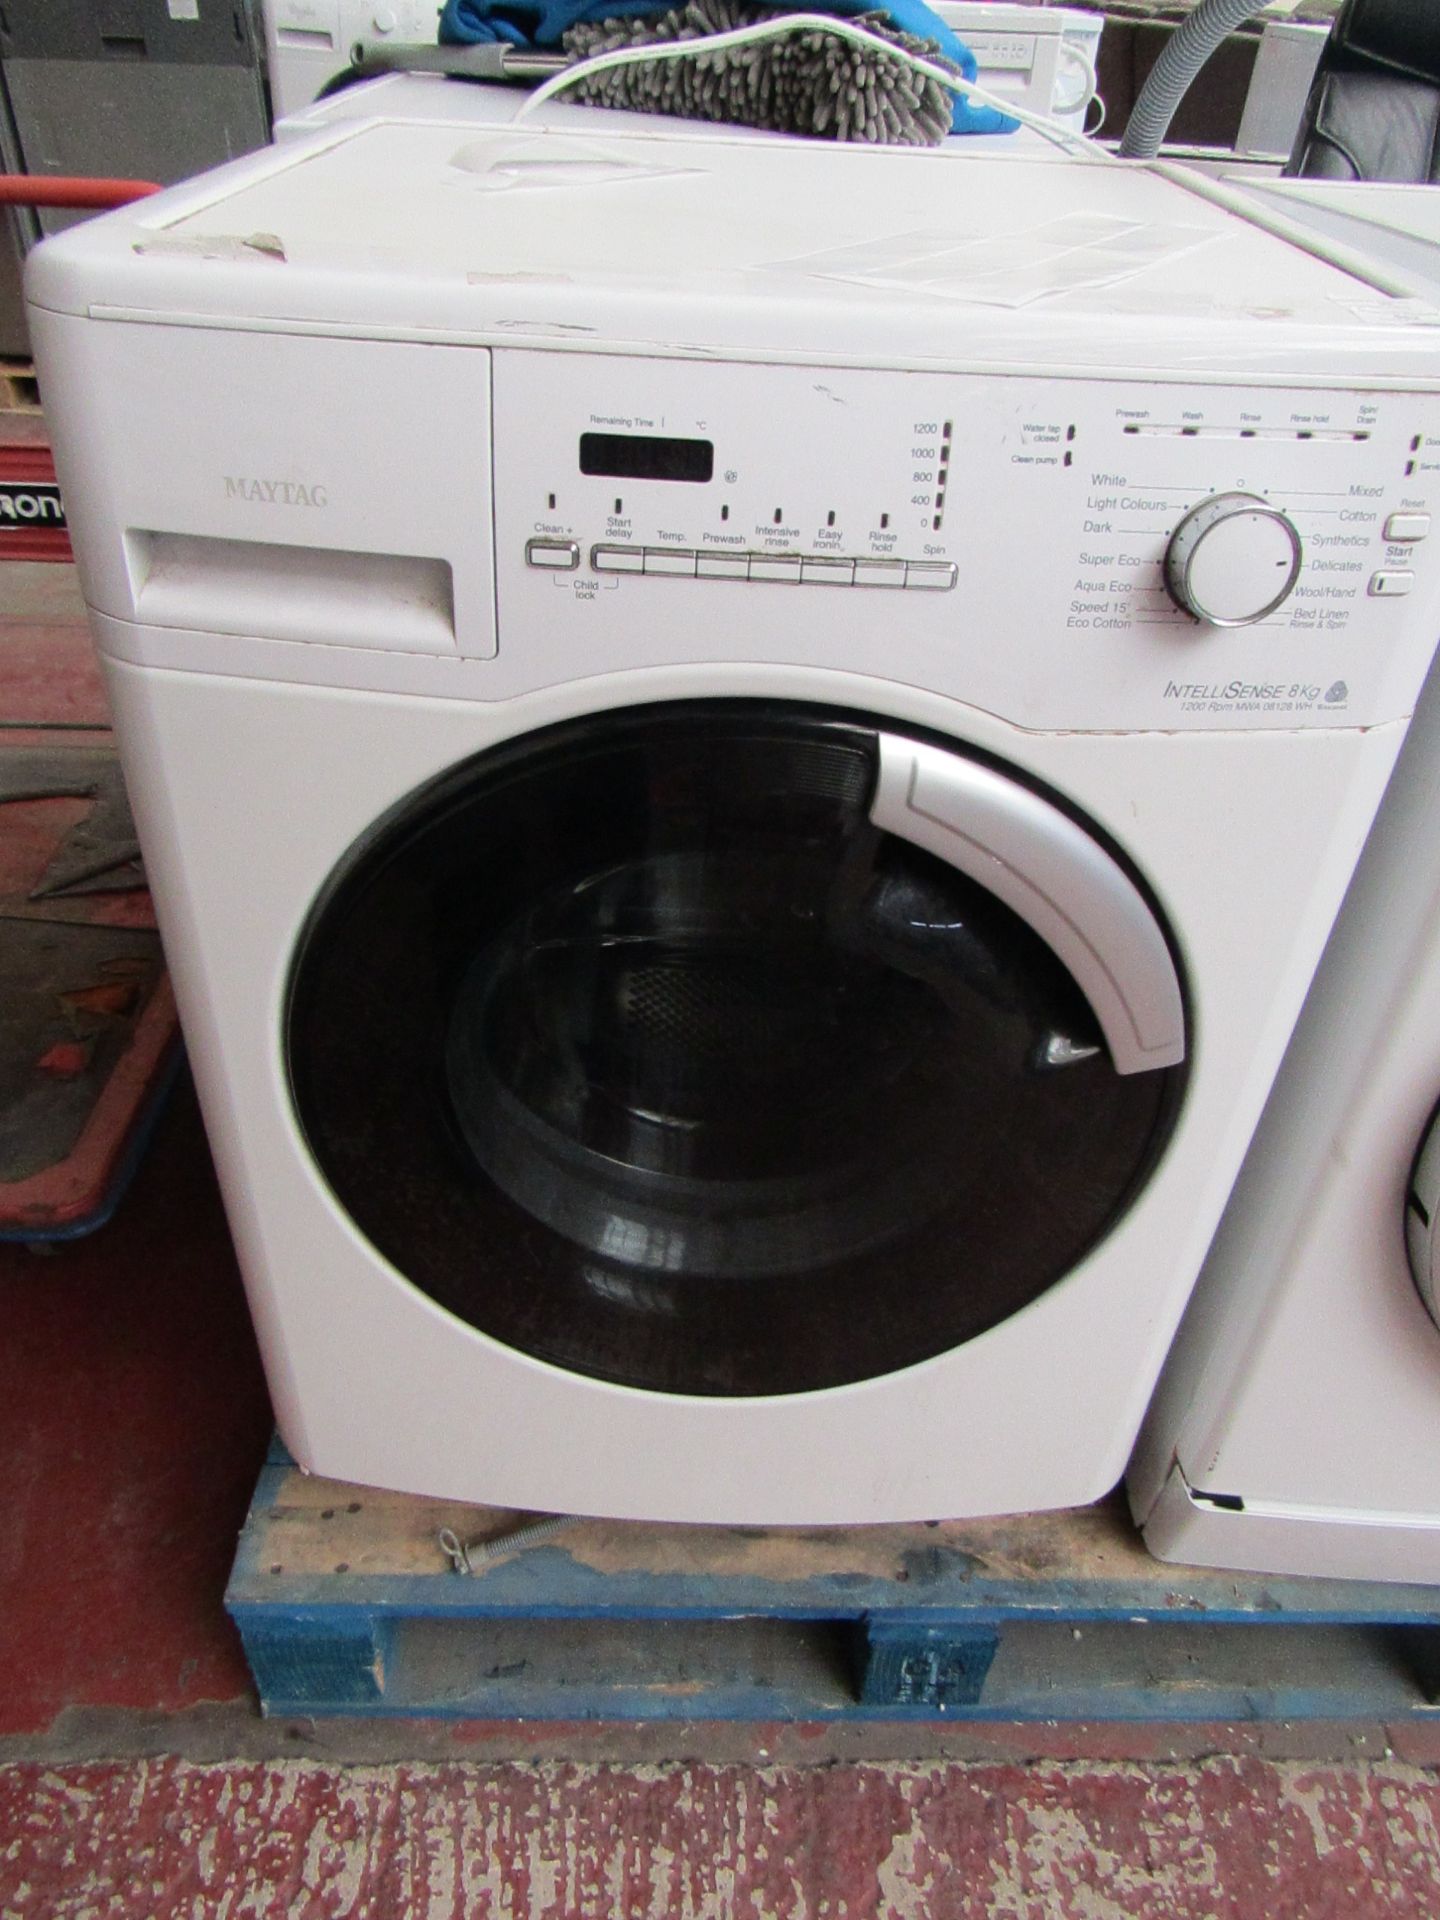 Mayteag Intellisense 8KG washing machine, Powers on and Spins